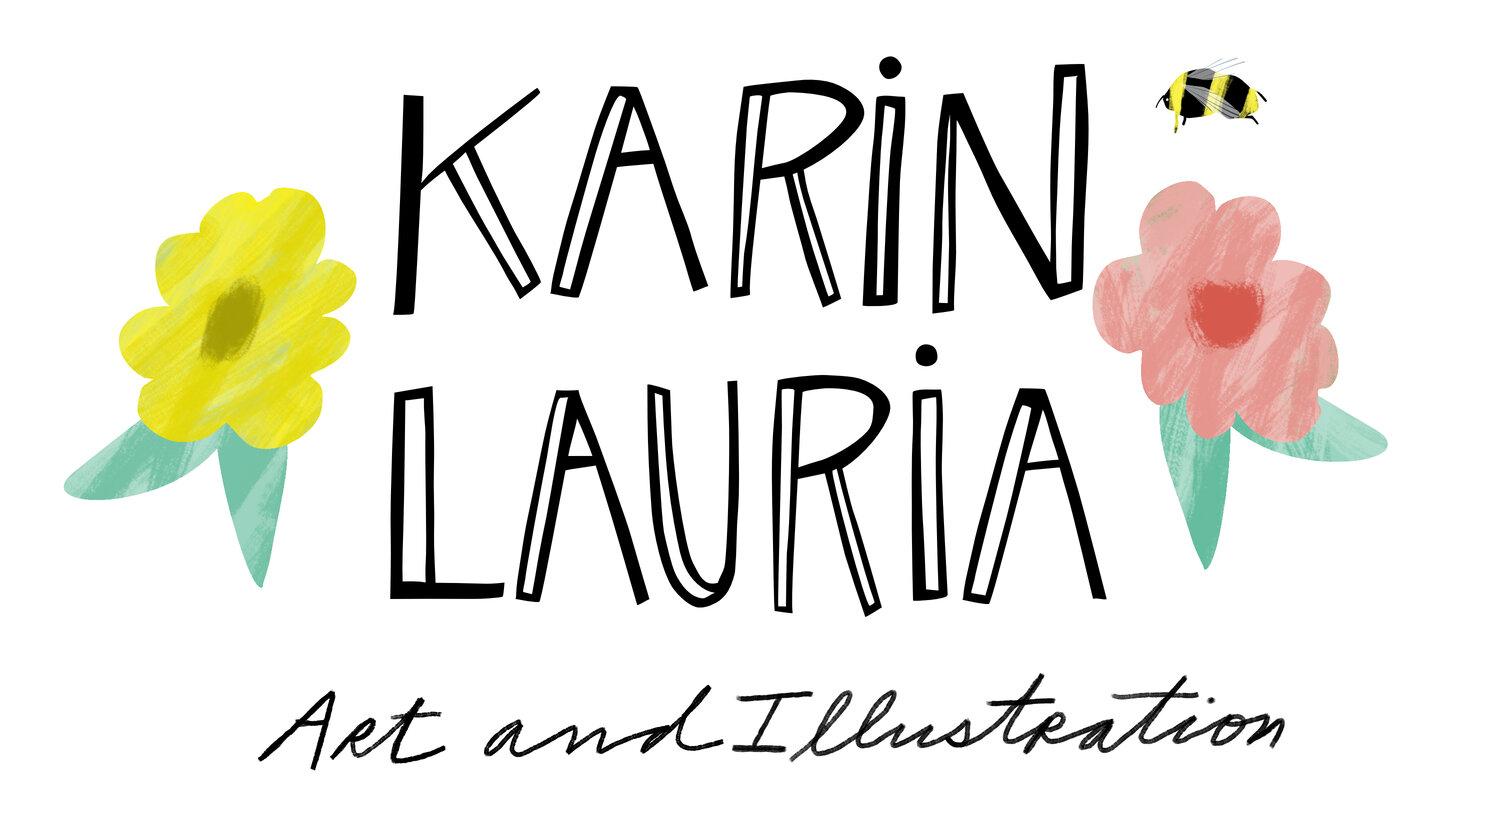 Karin Lauria Art and Illustration